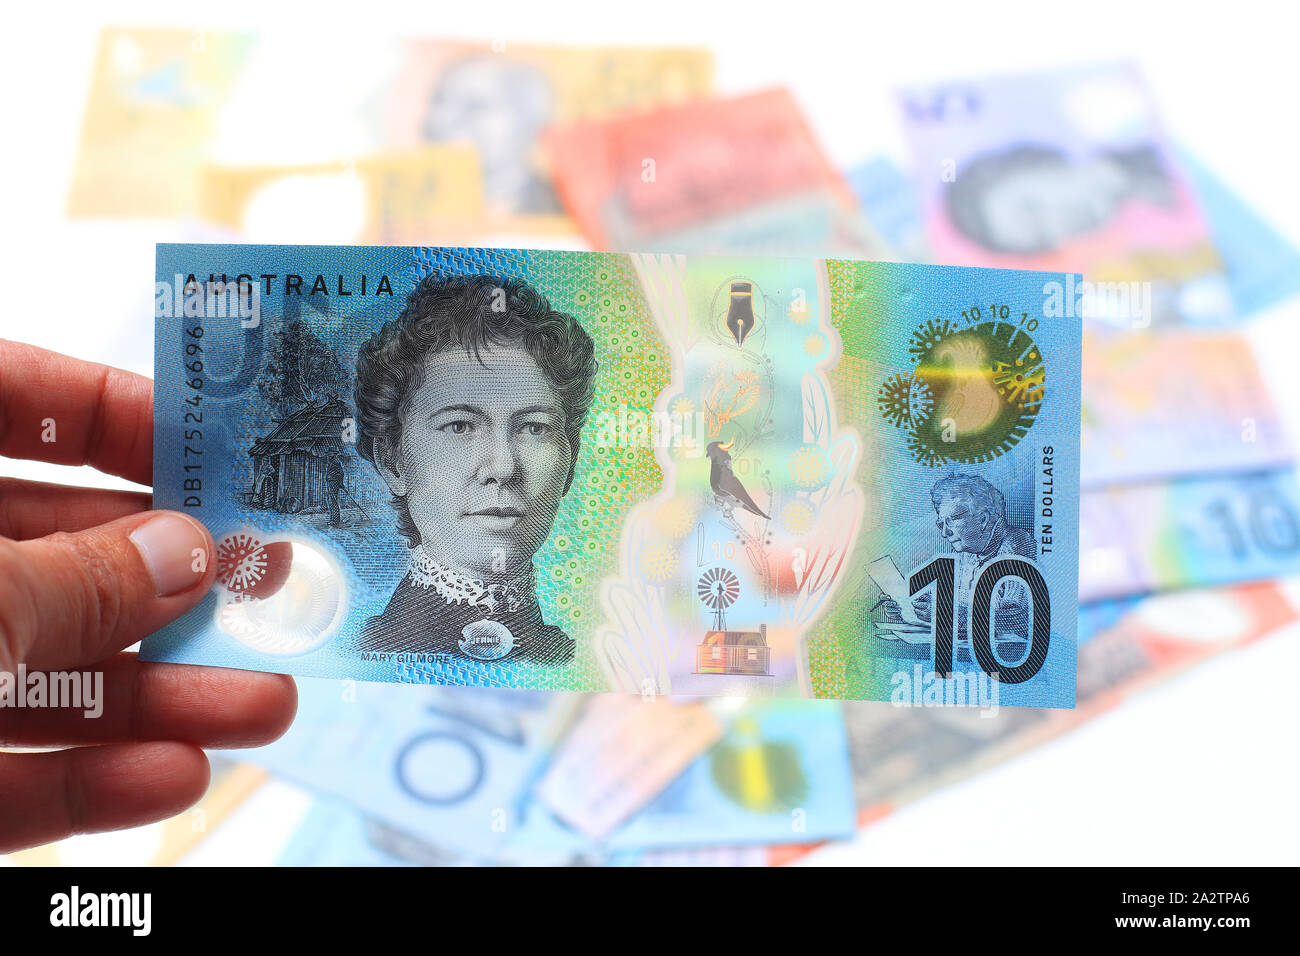 Dieci dollari, 10 dollari in valuta australiana nota Foto Stock